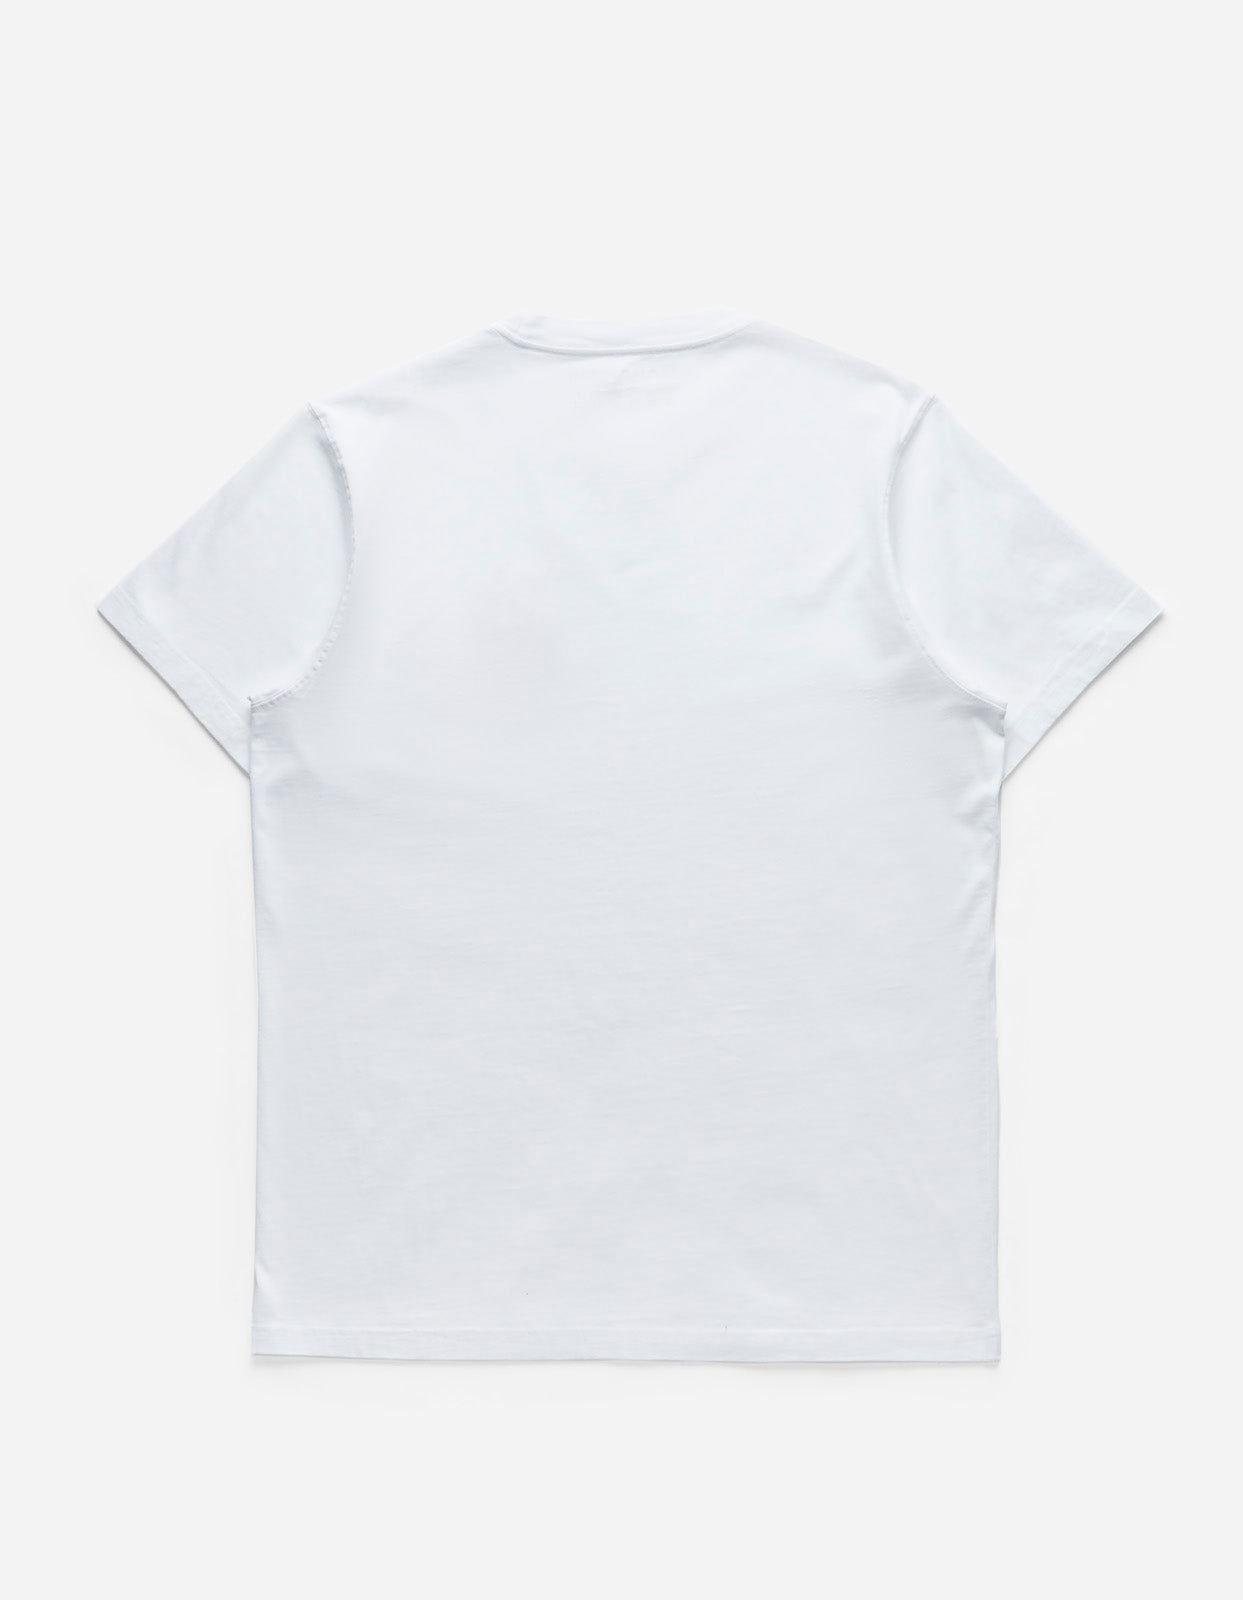 1254 Flaming Pearl T-Shirt White